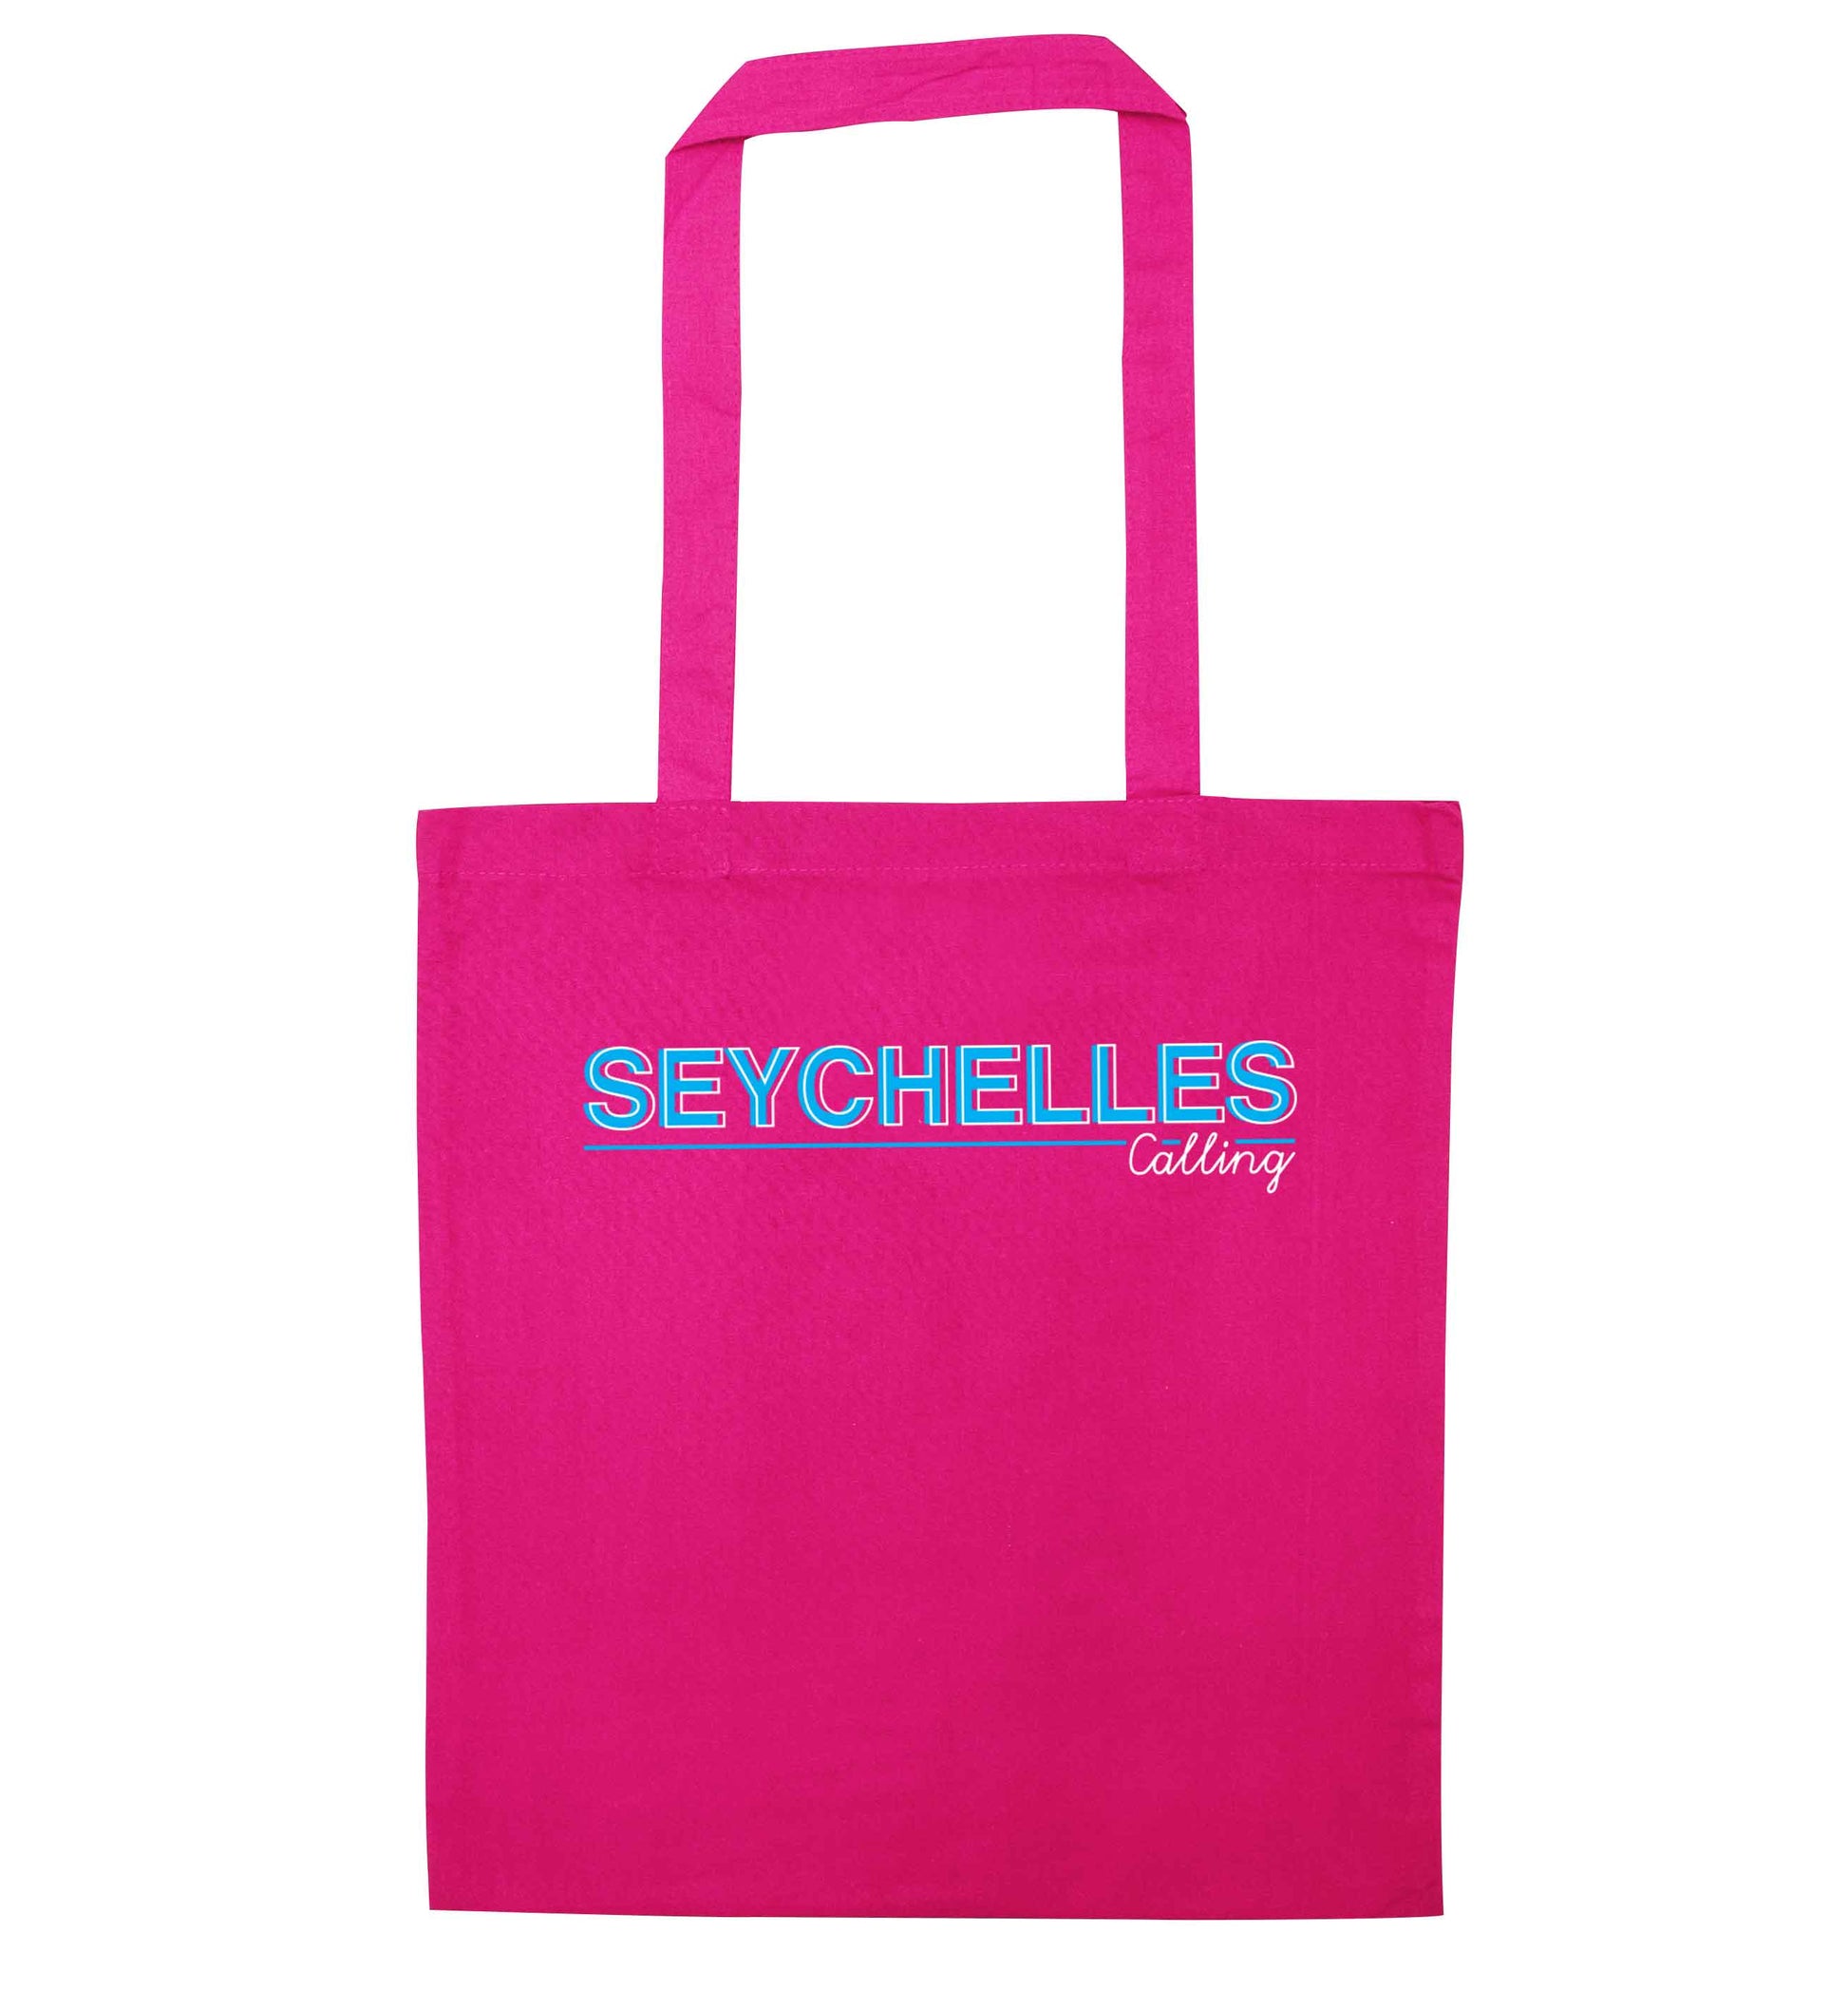 Seychelles calling pink tote bag